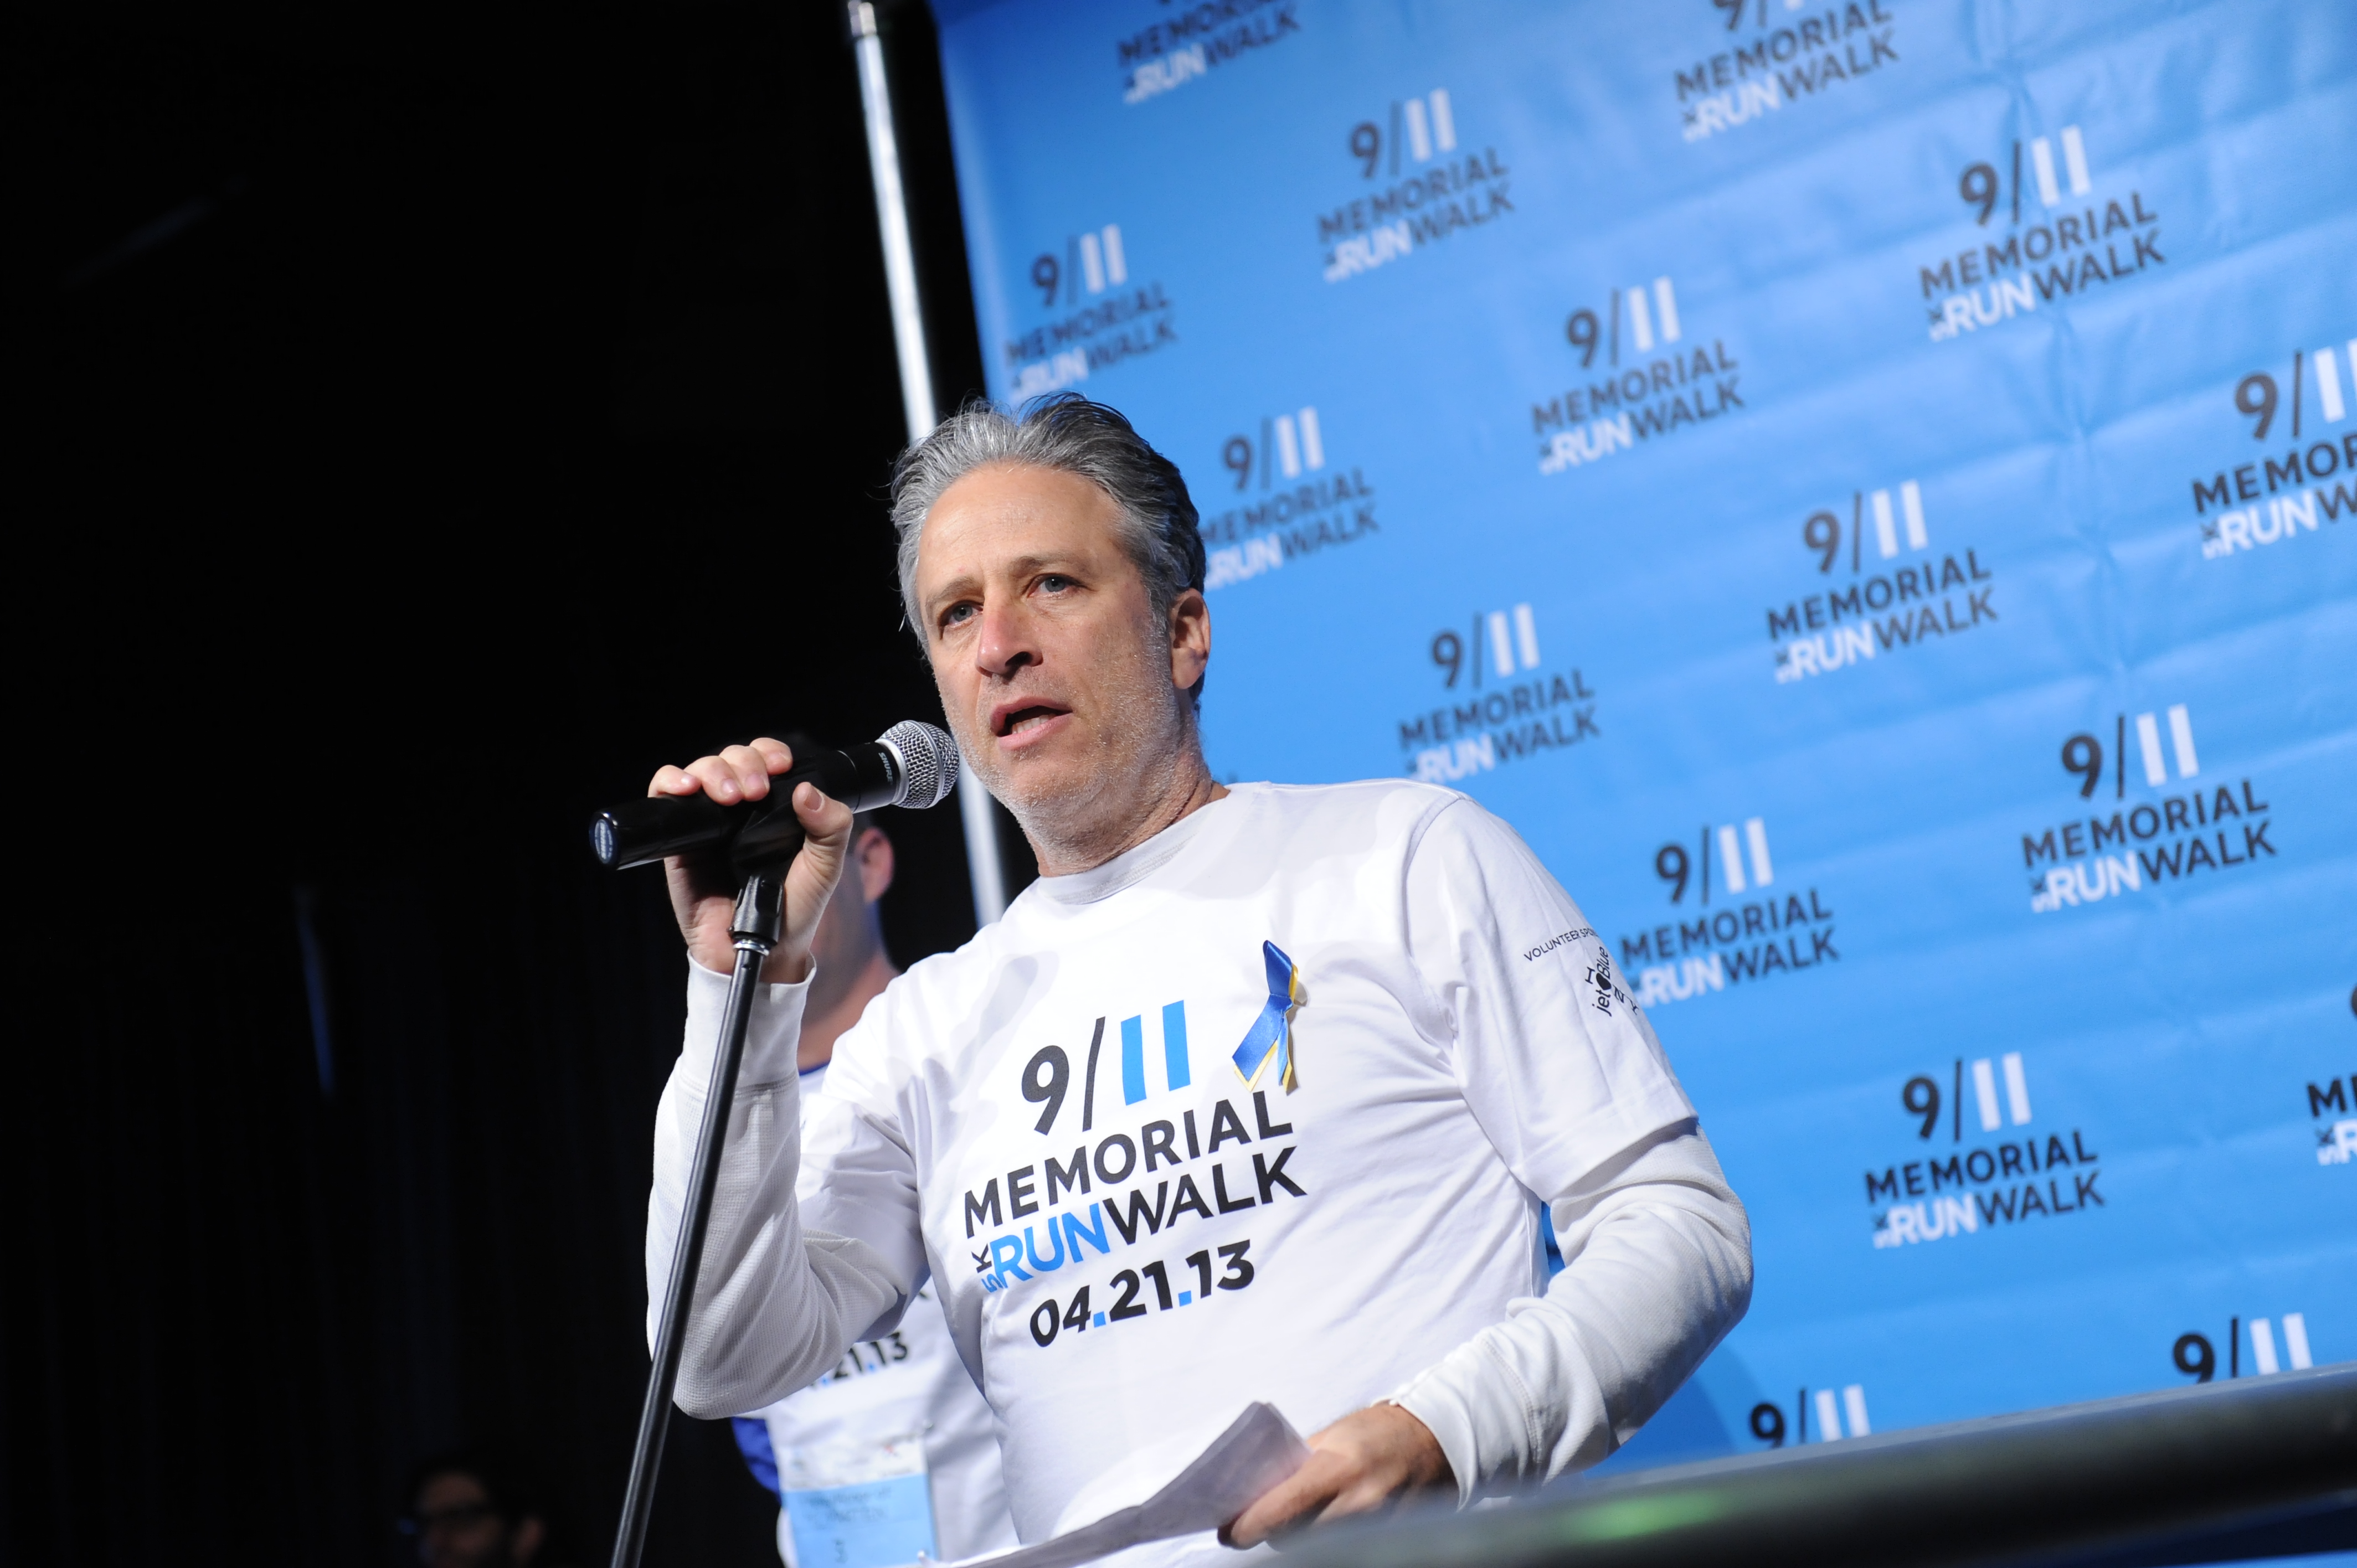 Jon Stewart speaks at a microphone while wearing a 9/11 Memorial 5K Run and Walk shirt.